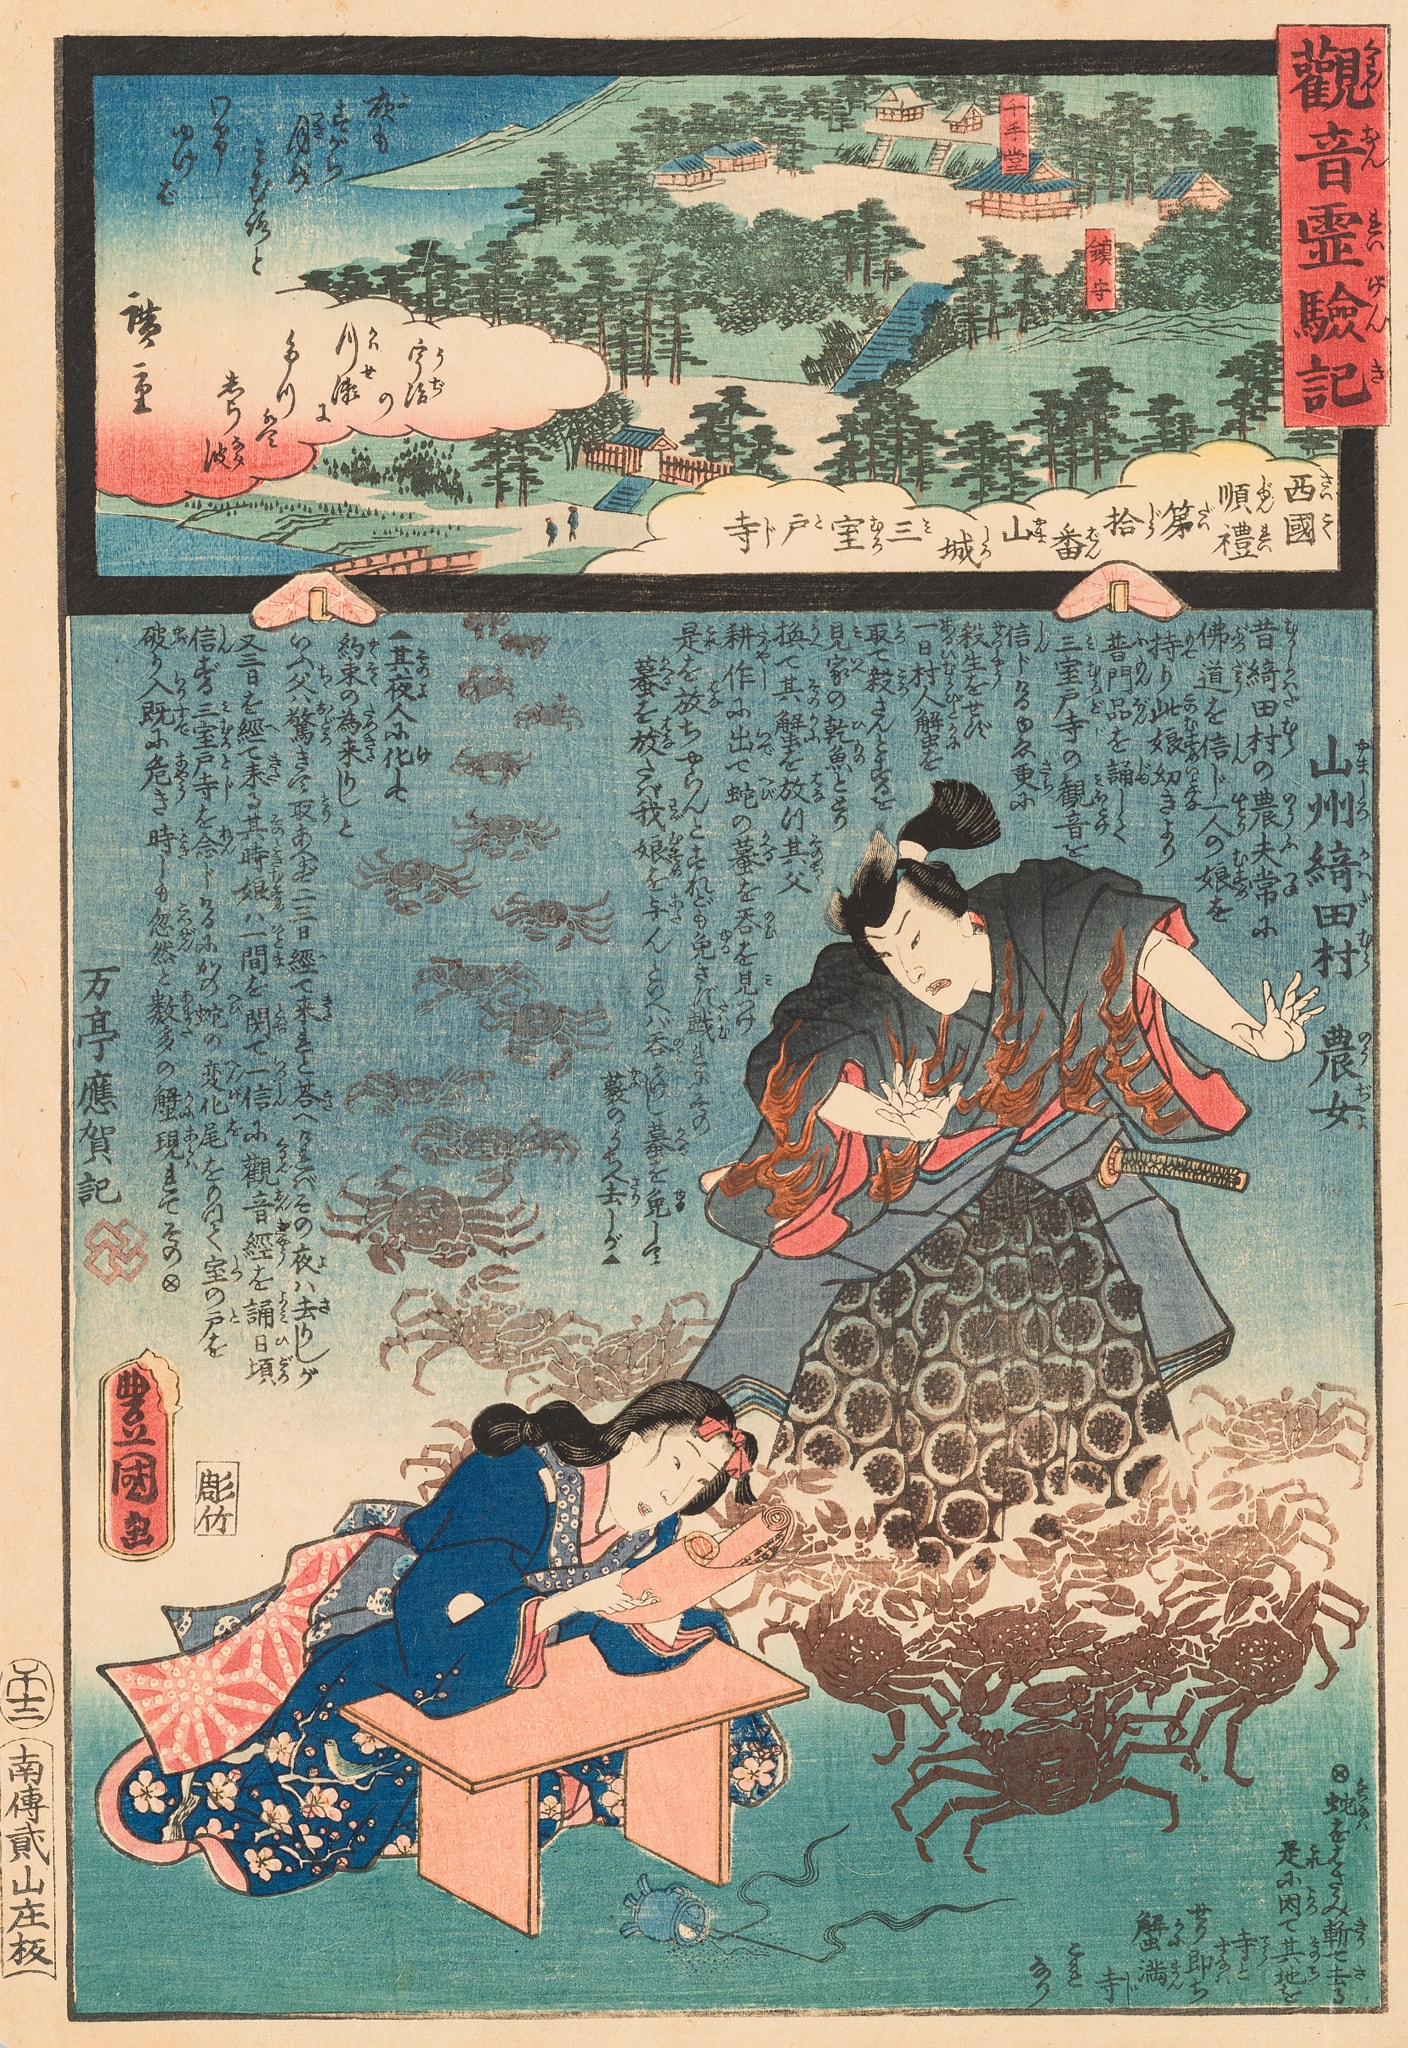 UTAGAWA KUNISADA I AND UTAGAWA HIROSHIGE II: THE STORY OF THE FARM GIRL OF KAIDA VILLAGE IN YAMASHIRO by Utagawa Kunisada, Hiroshige II, dated 1859